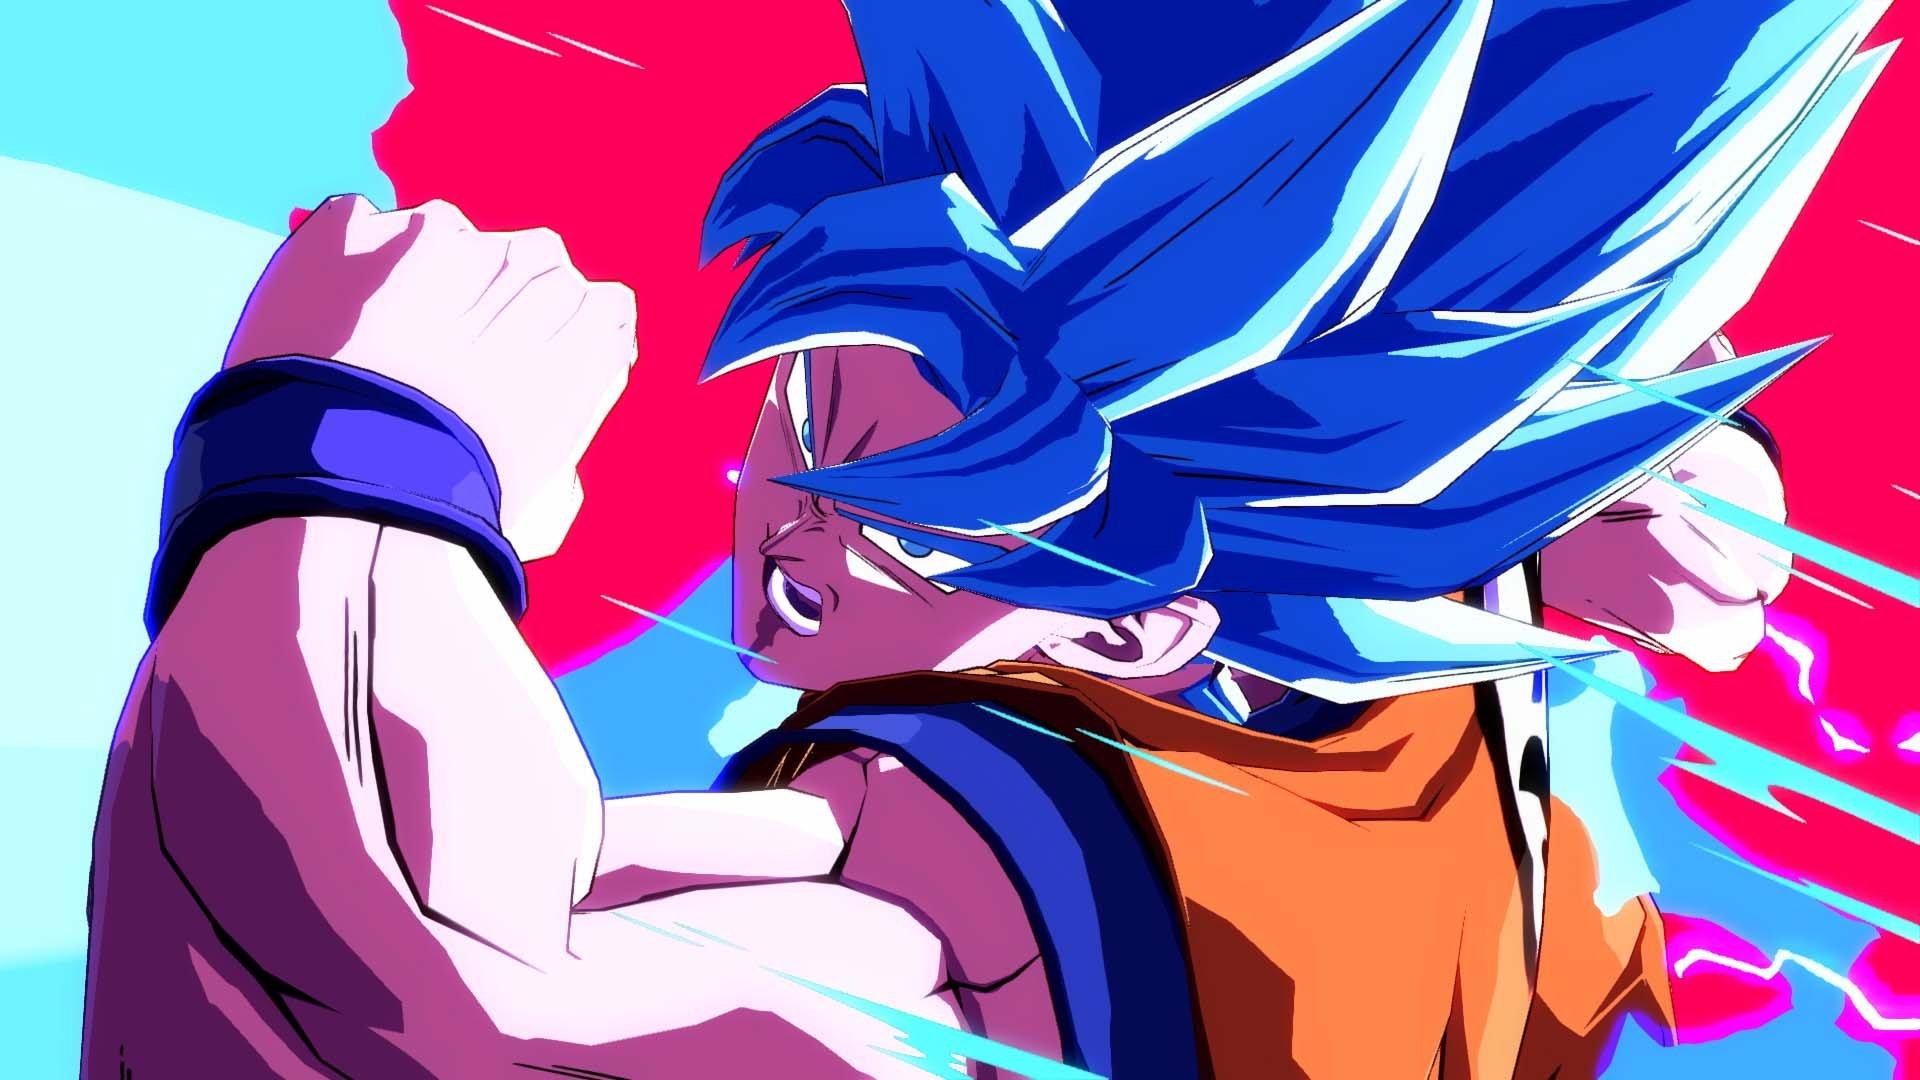 Goku Super Saiyan Blue Kaioken Style Digital Graphic · Creative